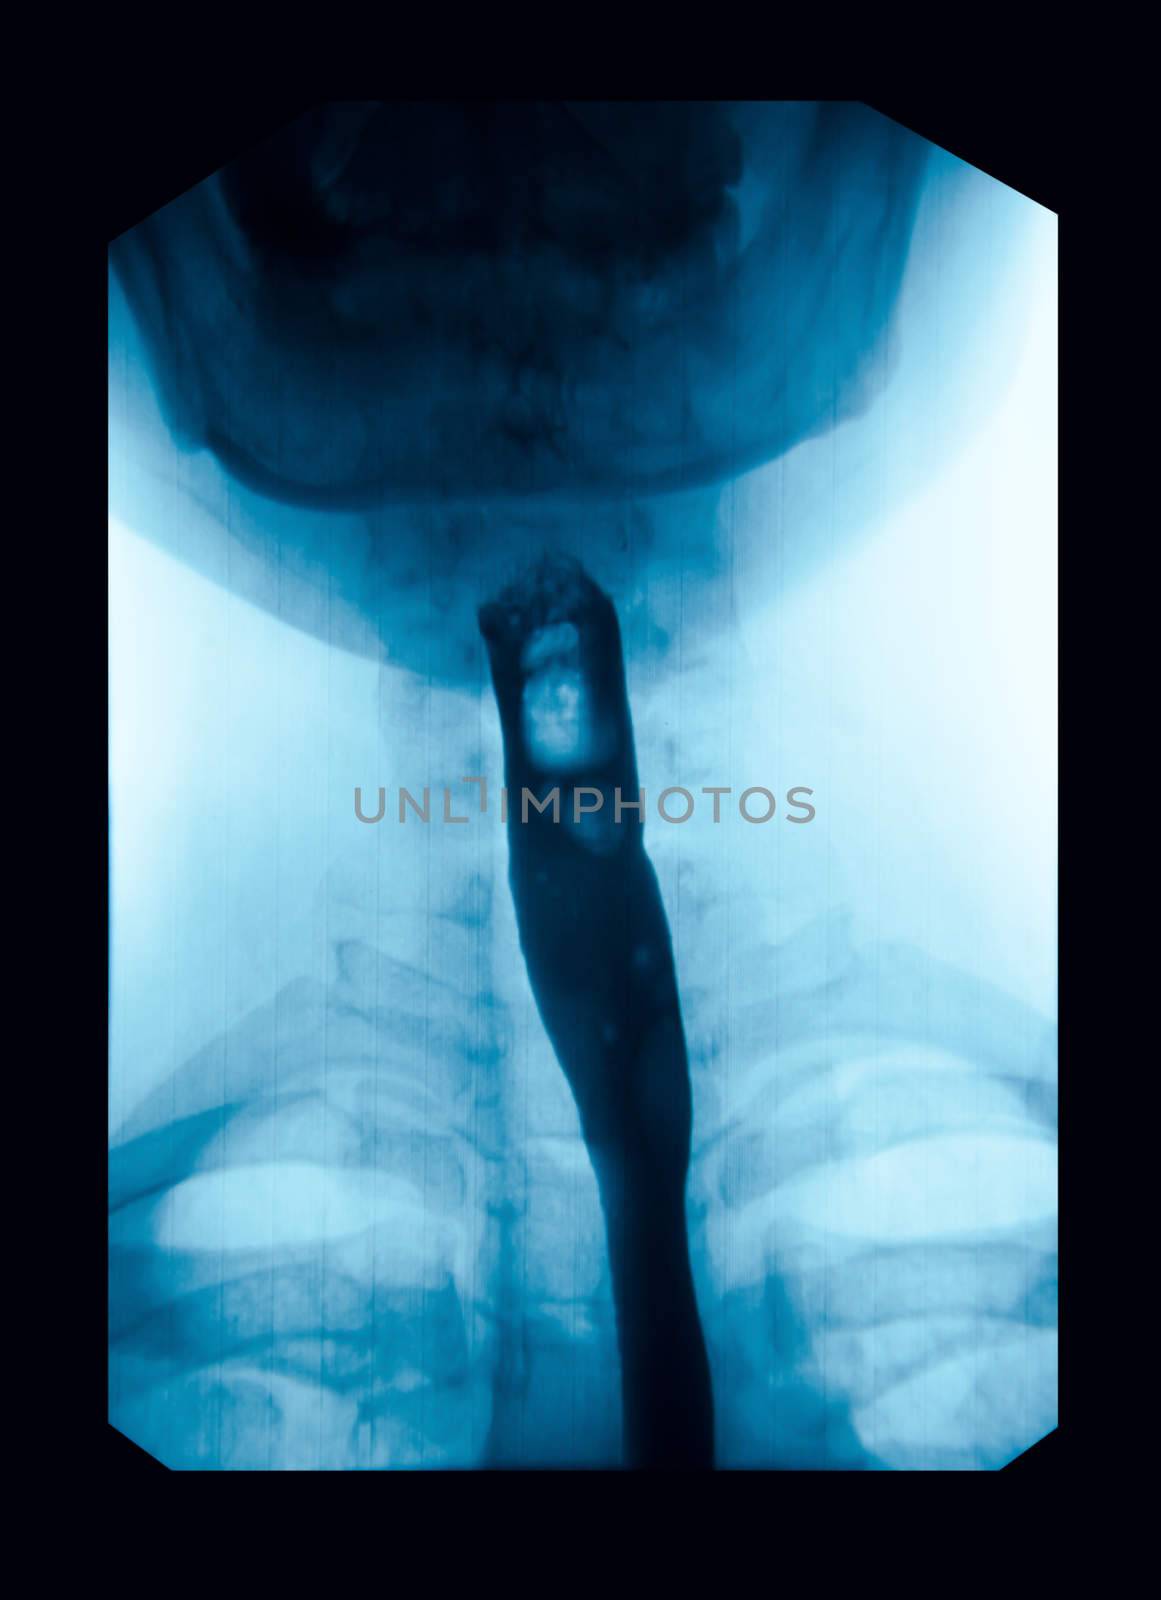 The image of x-ray upper gastrointestinal (UGI), Esophagram use swallow Barium Sulfate method